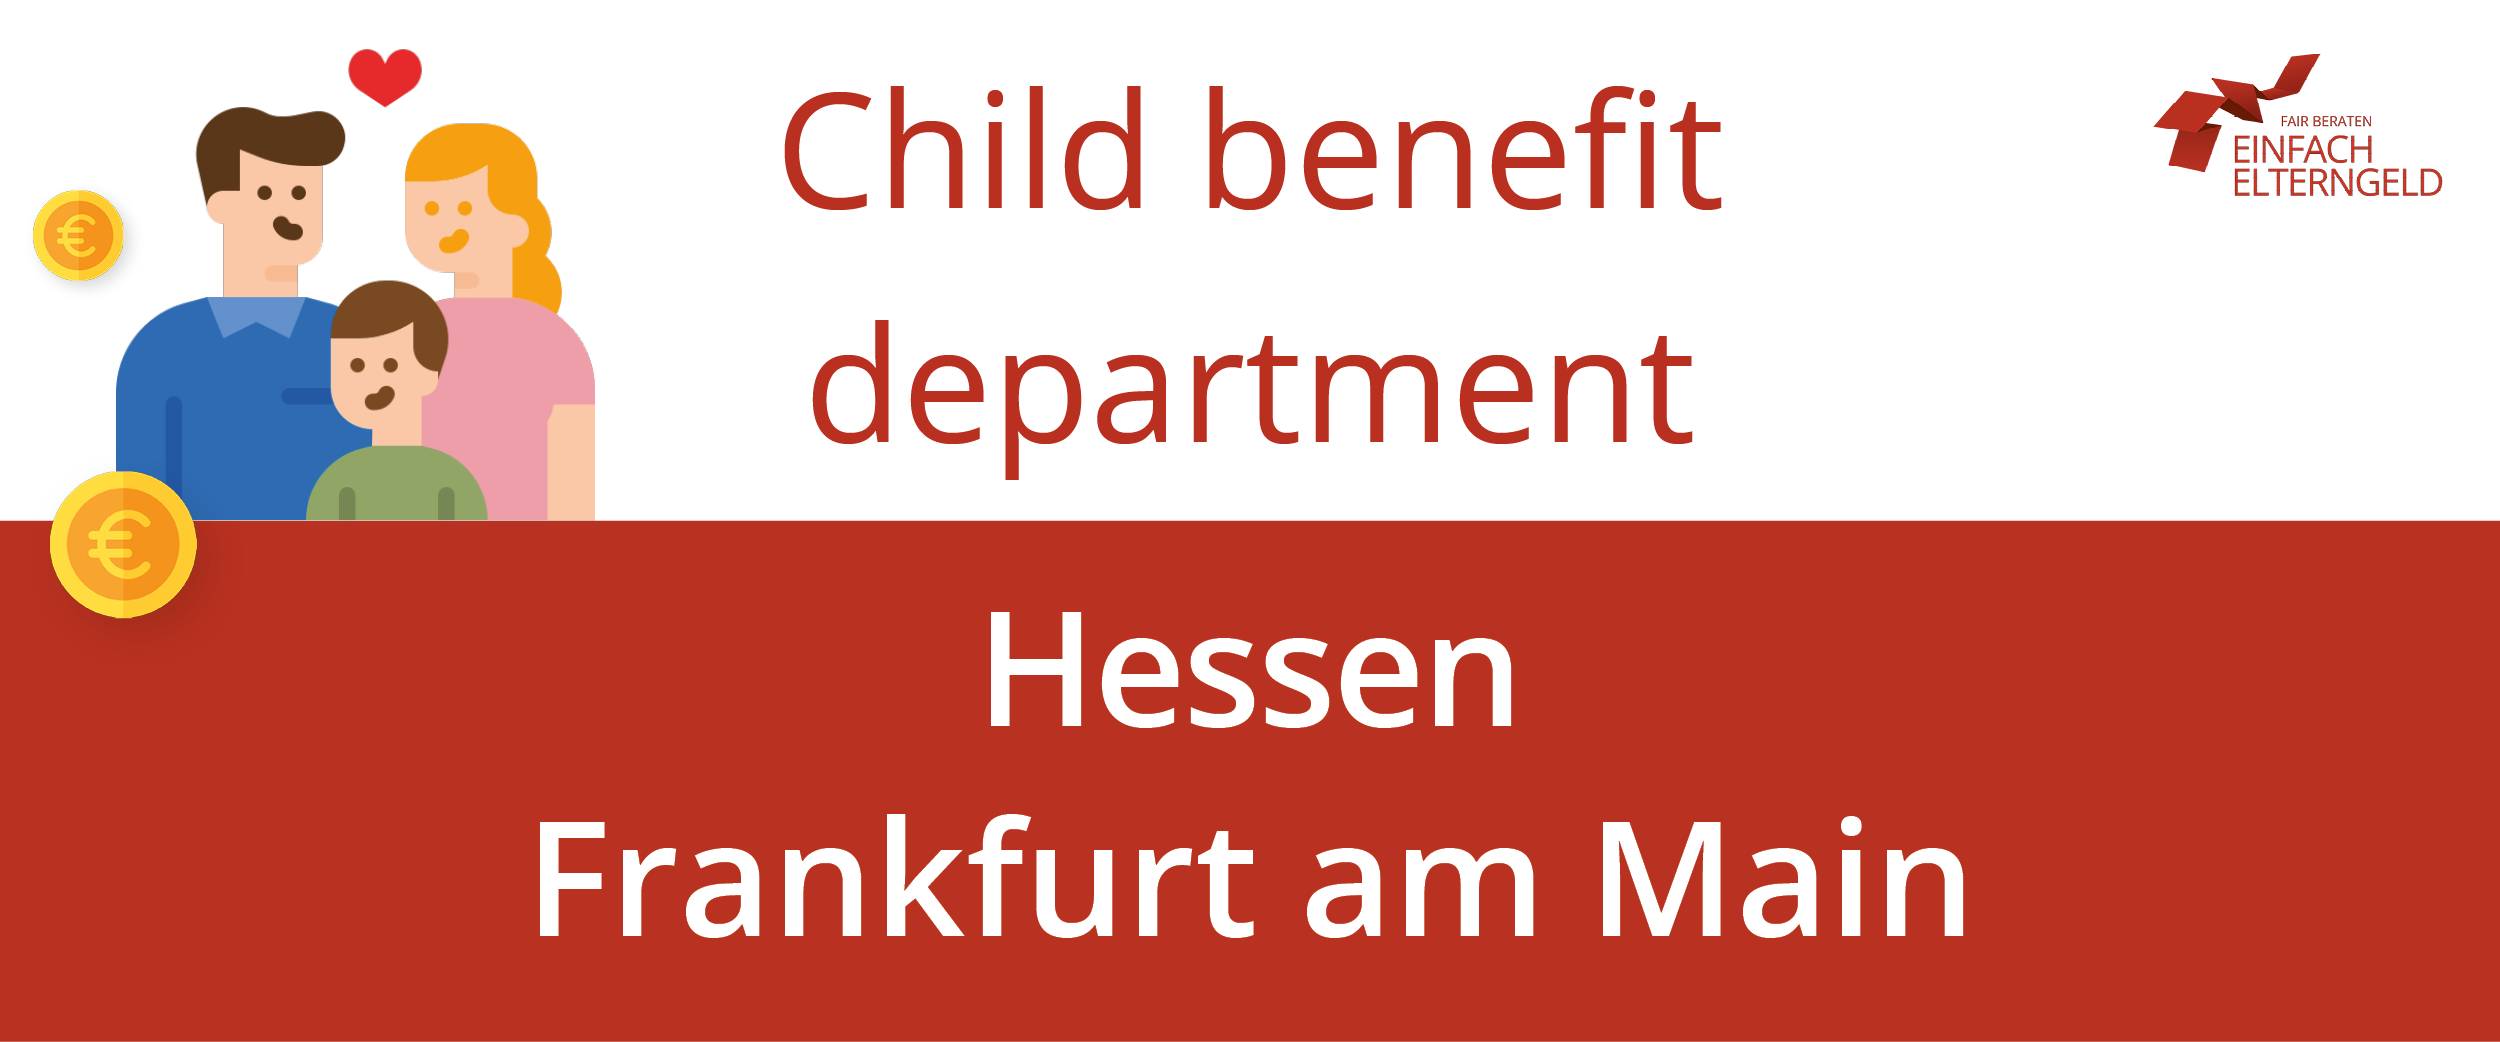 We present you the Child benefit department Hessen Frankfurt am Main.